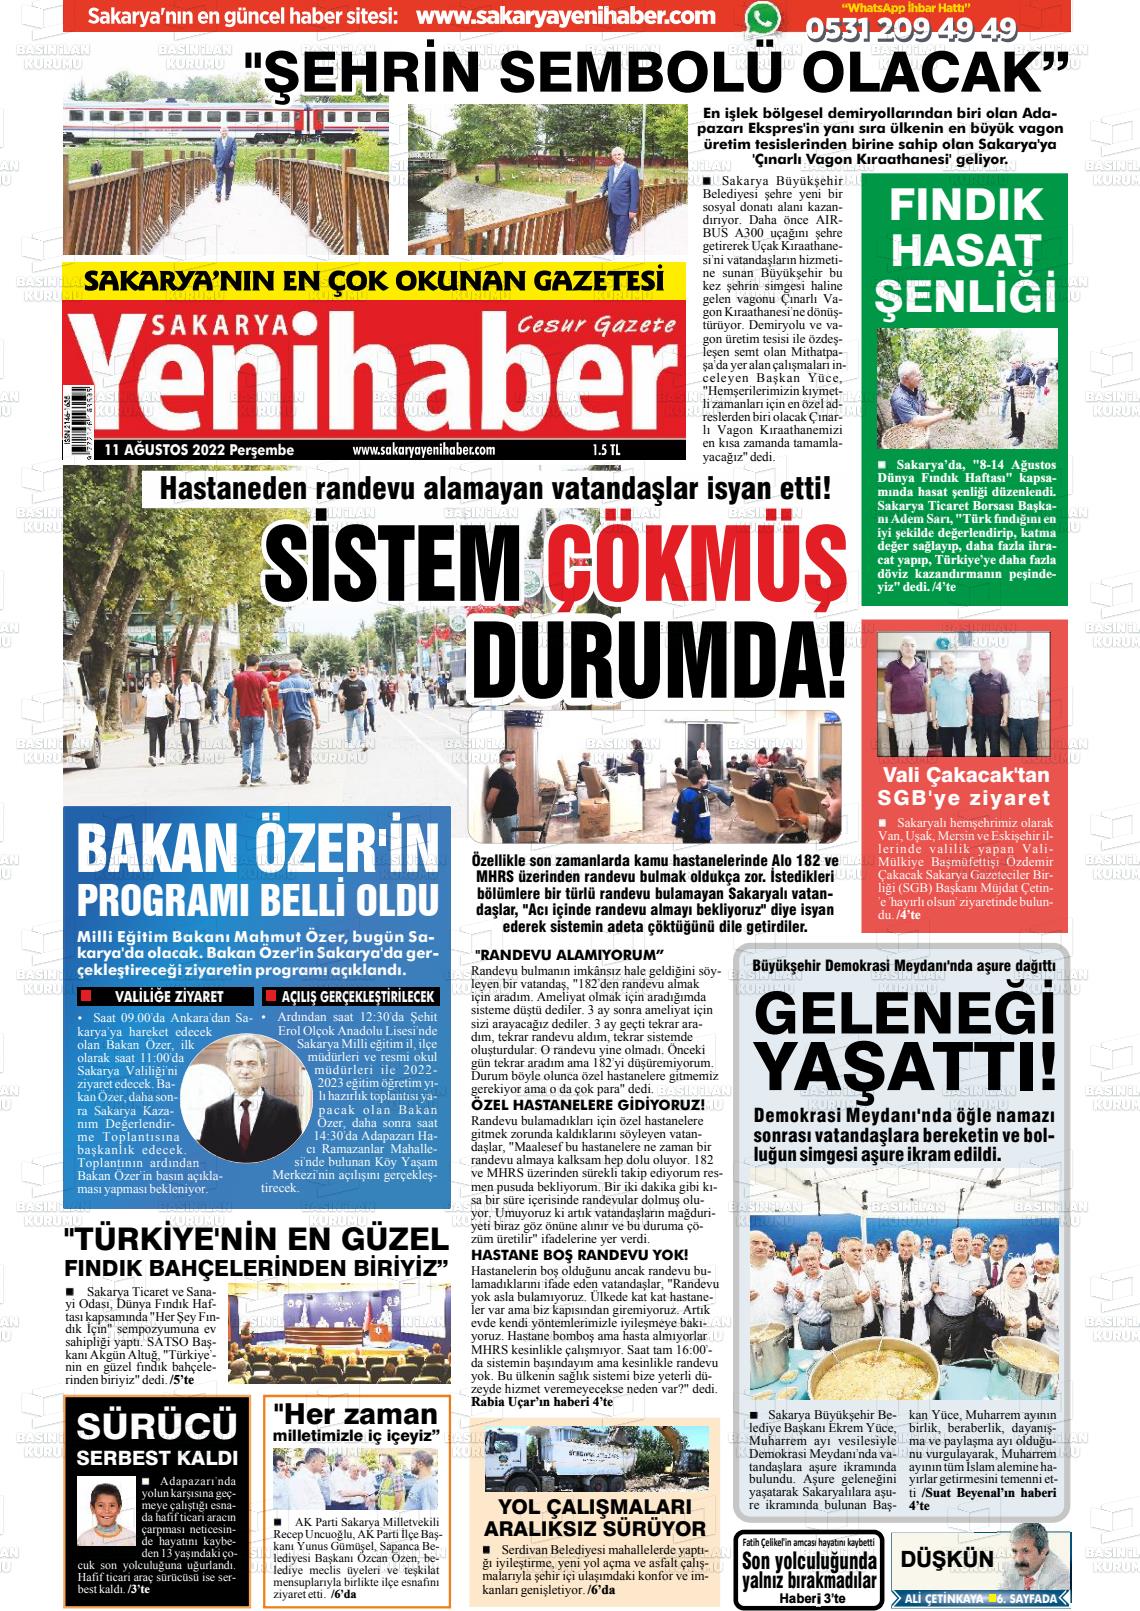 11 Ağustos 2022 Sakarya Yeni Haber Gazete Manşeti